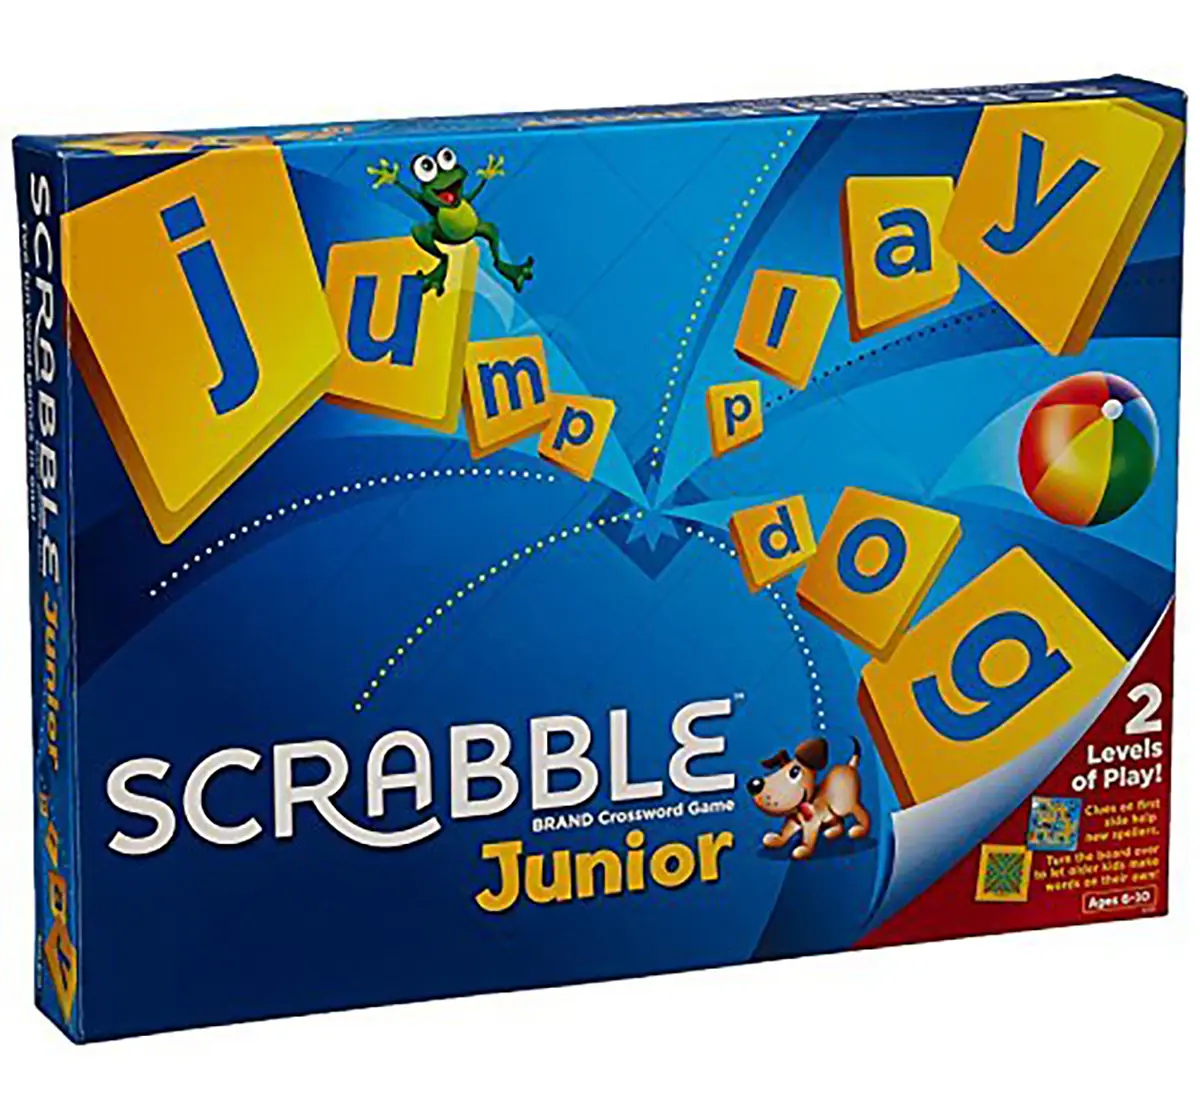 Mattel Junior Scrabble Crossword Game, Fun Word-Building Experience, Educational Board Game for Kids 5Y+